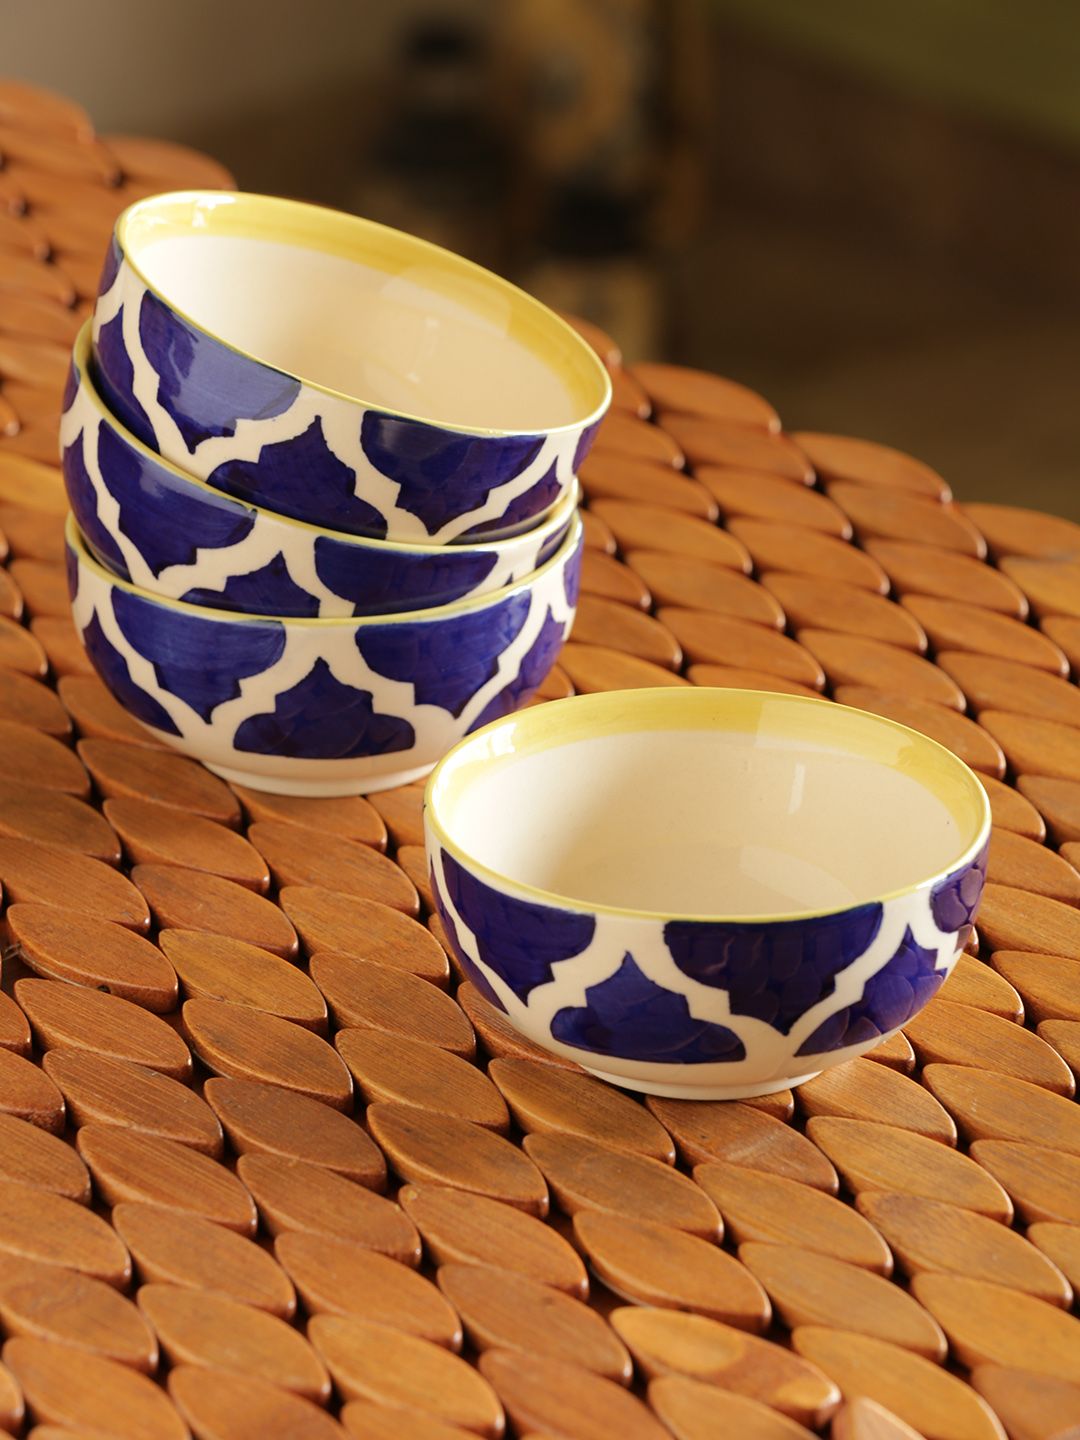 ExclusiveLane Four Mediterranean Bowls Handpainted Serving Bowls In Ceramic (Set Of 4) Price in India